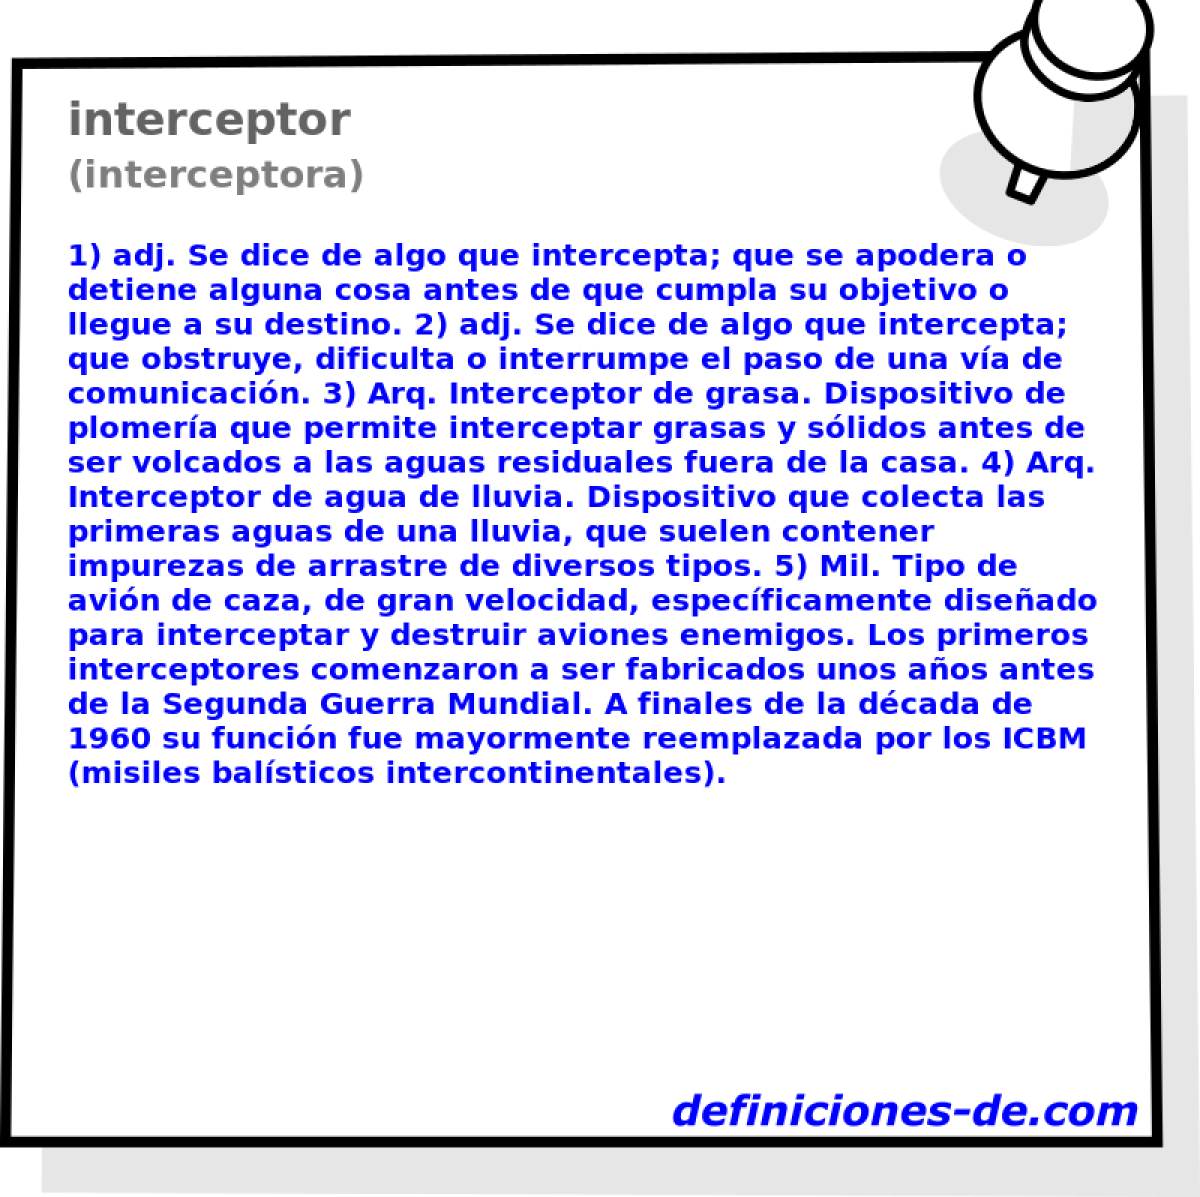 interceptor (interceptora)